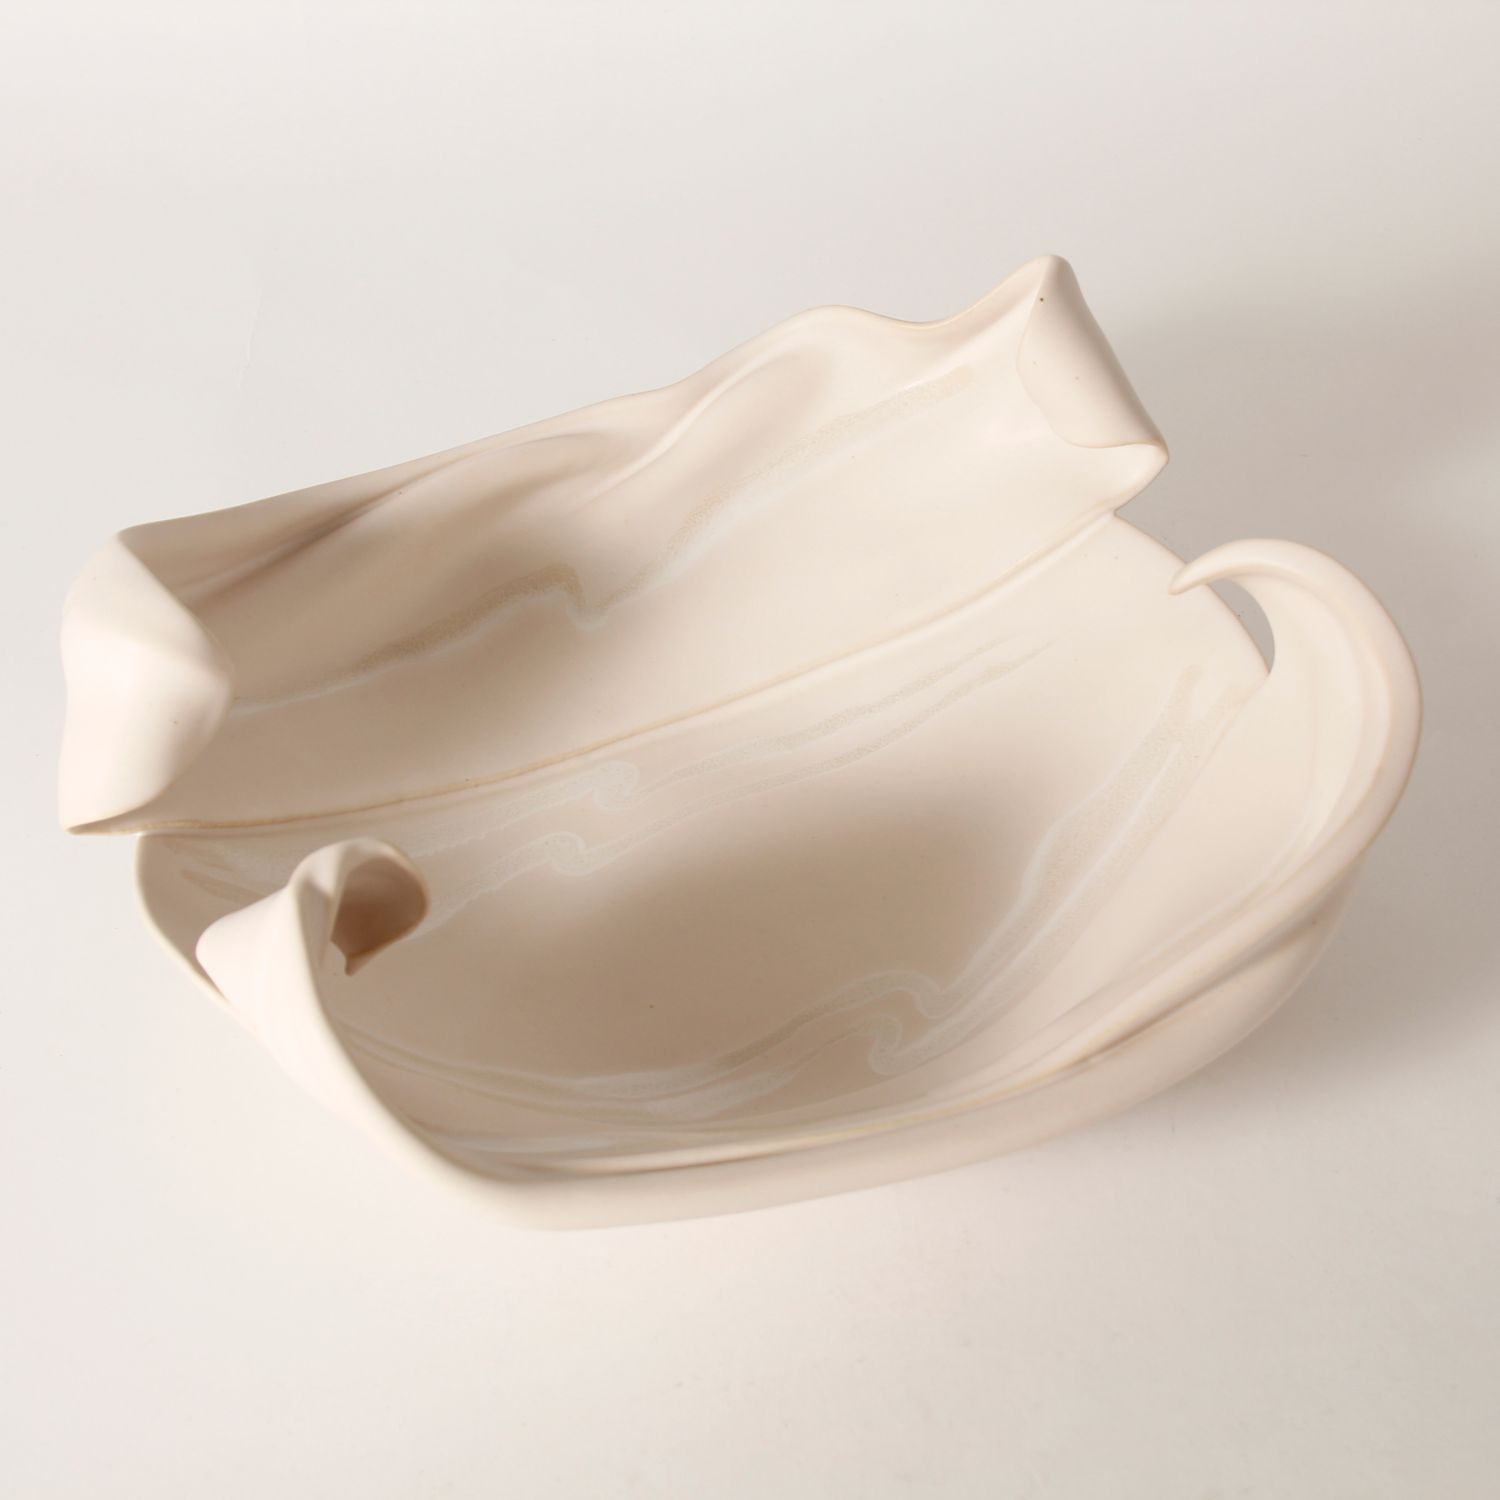 Nancy Macnaughton Hilborn: Curly Bowl Product Image 5 of 5